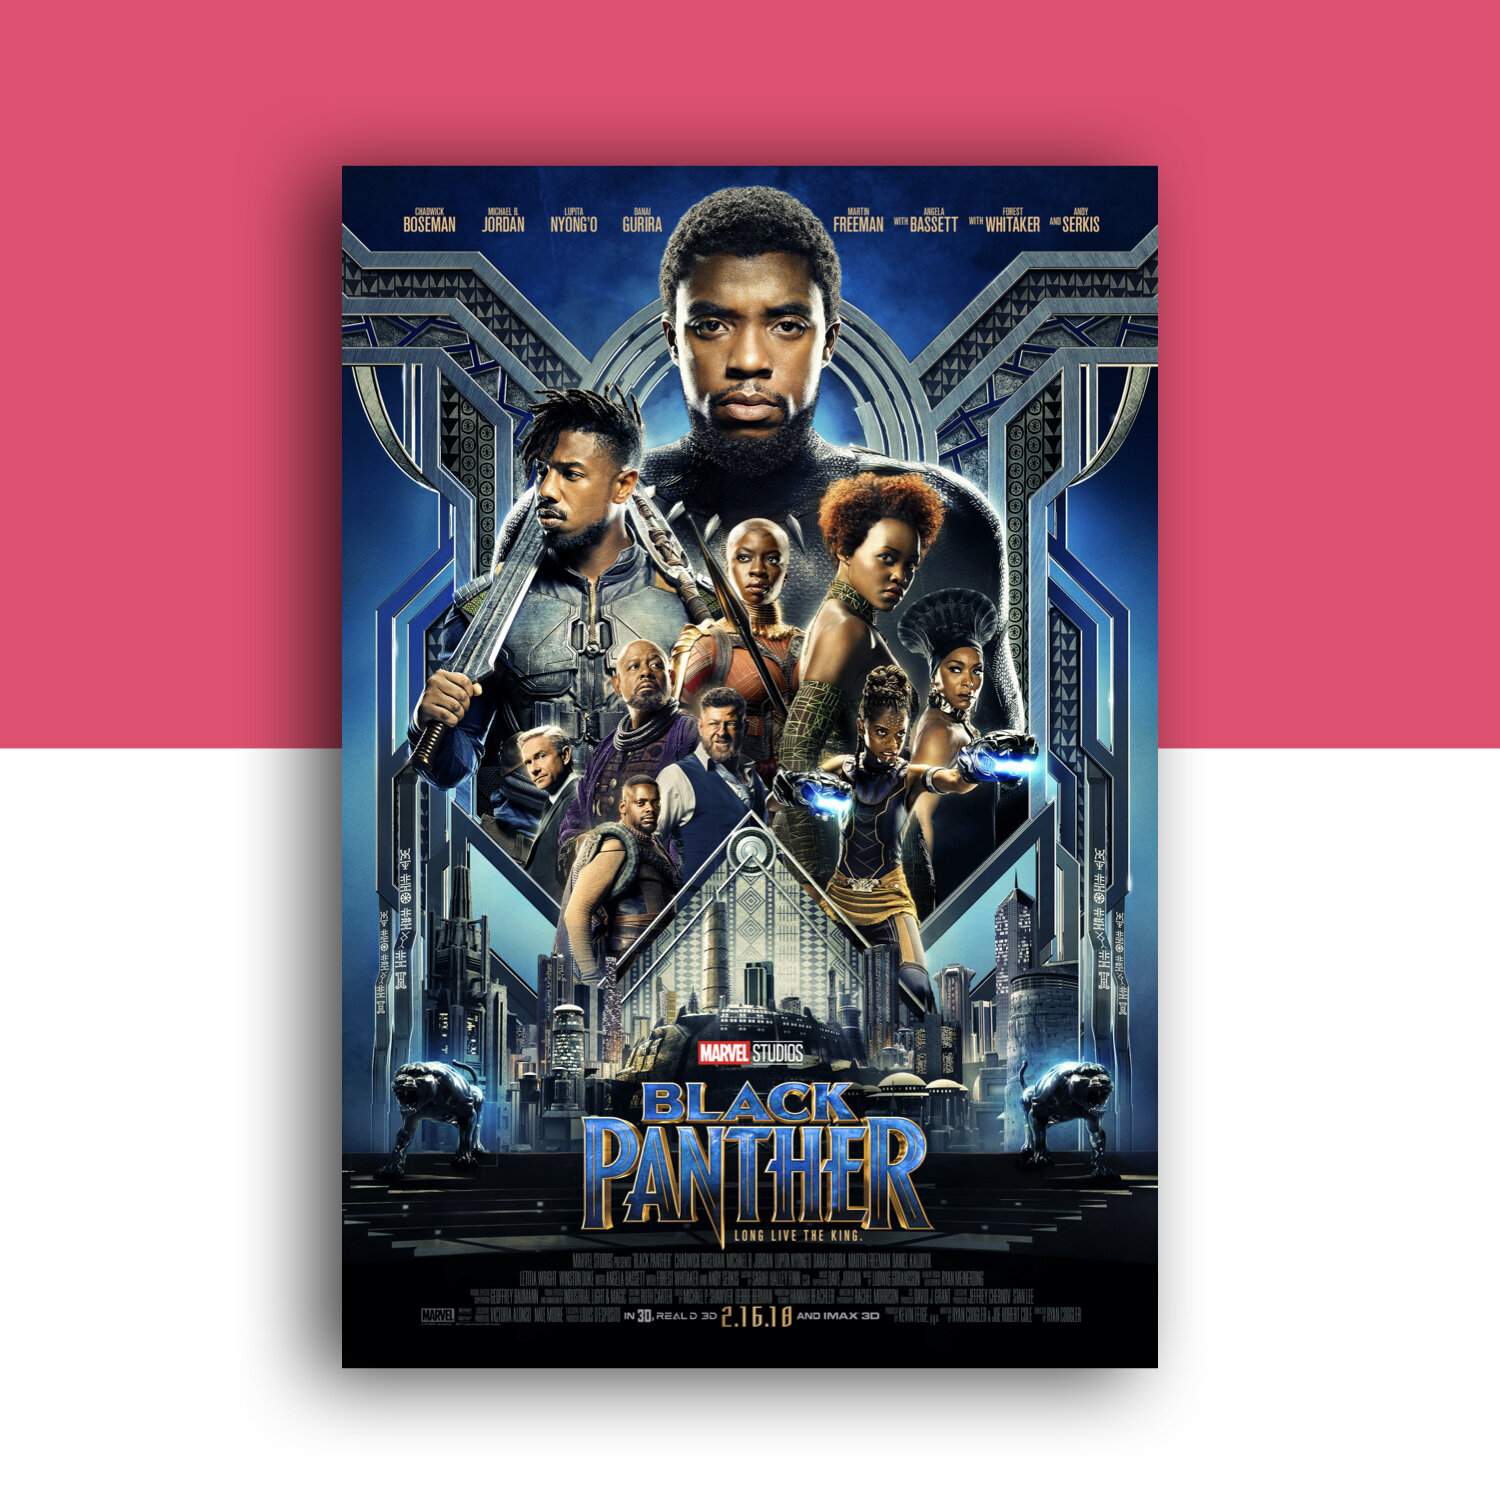 equality-superbloom-black-panther-movie.jpeg